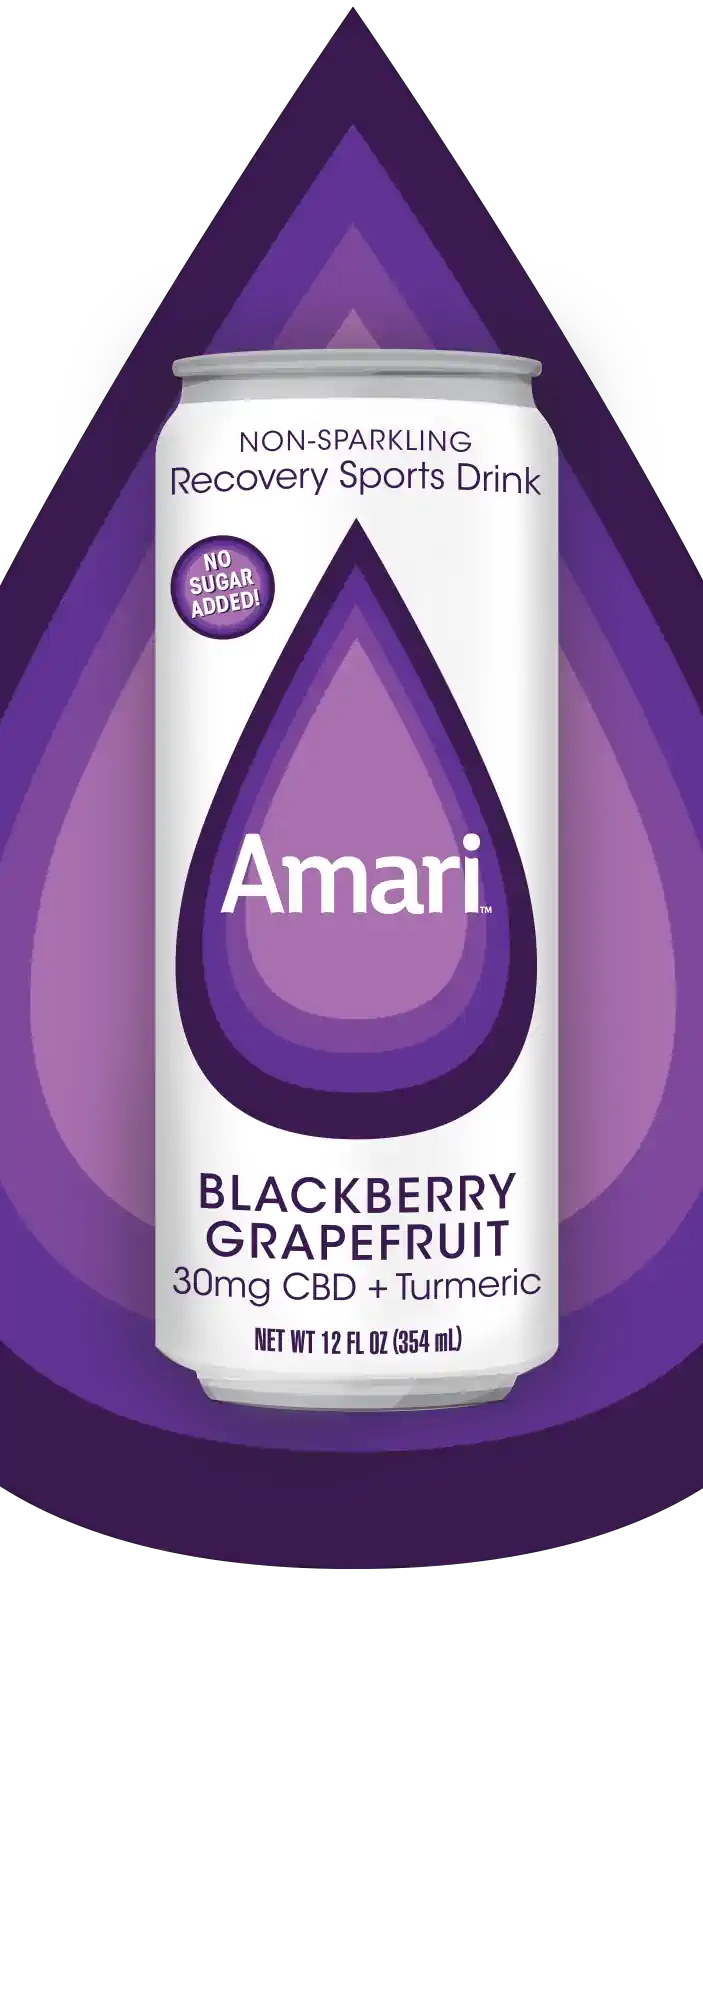 Can of Blackberry Grapefruit Amari